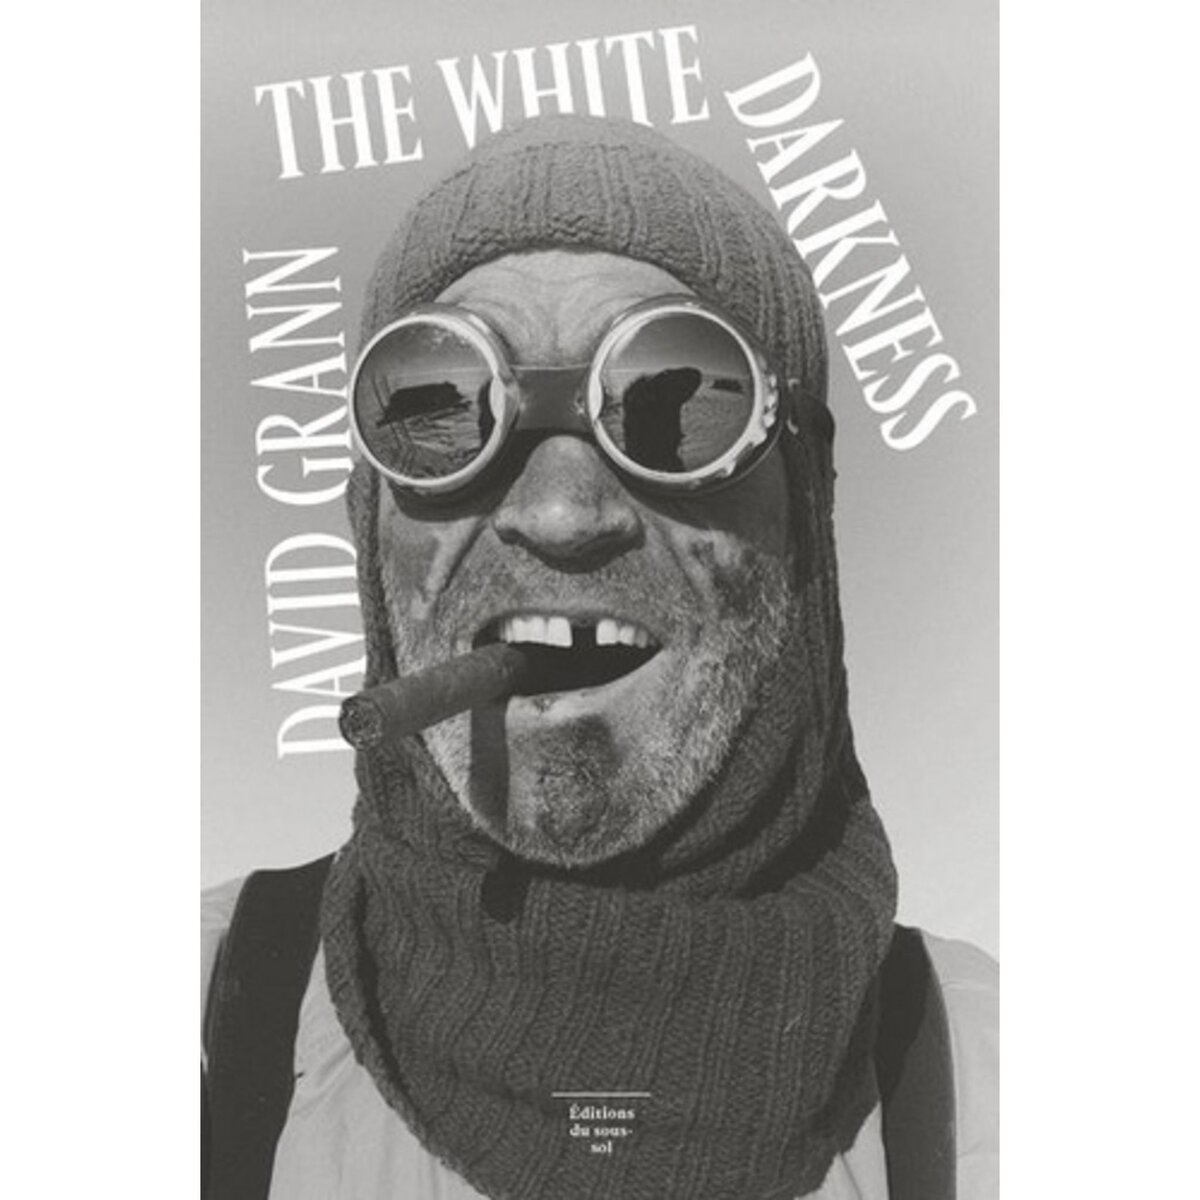  THE WHITE DARKNESS, Grann David